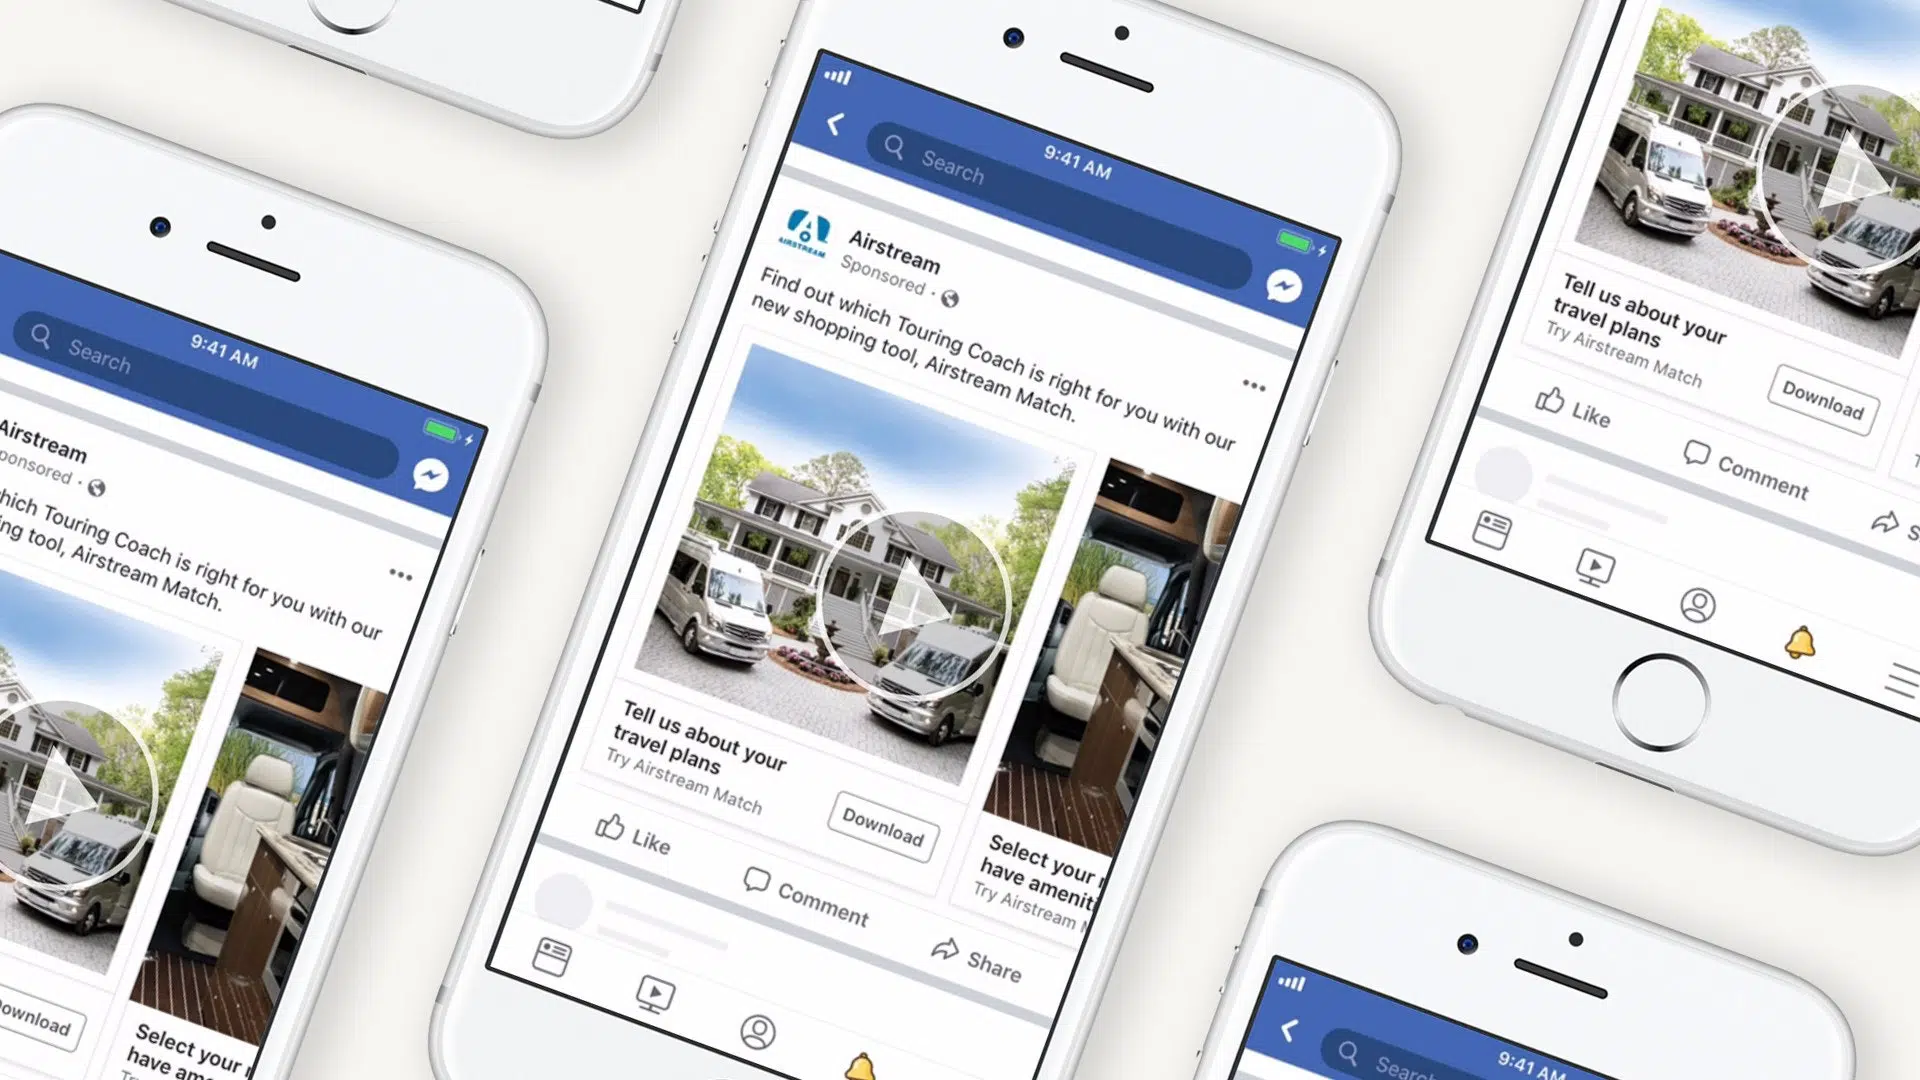 Airstream Facebook Ads on iPhone